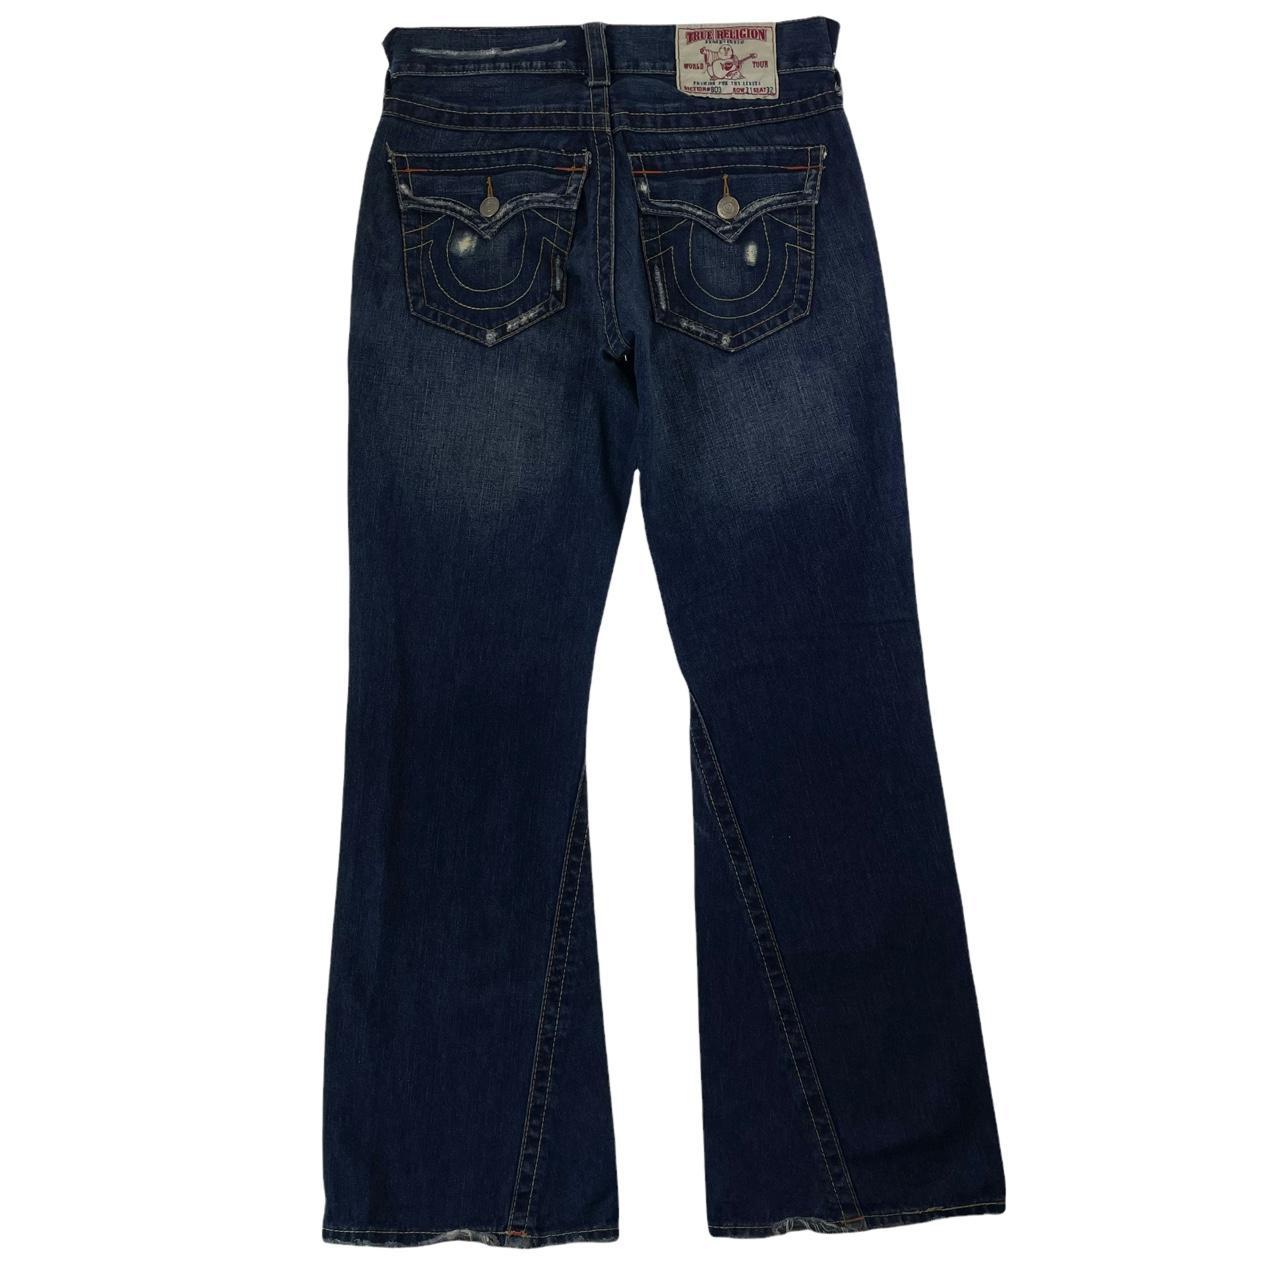 True religion big stitch flared jeans trousers... - Depop